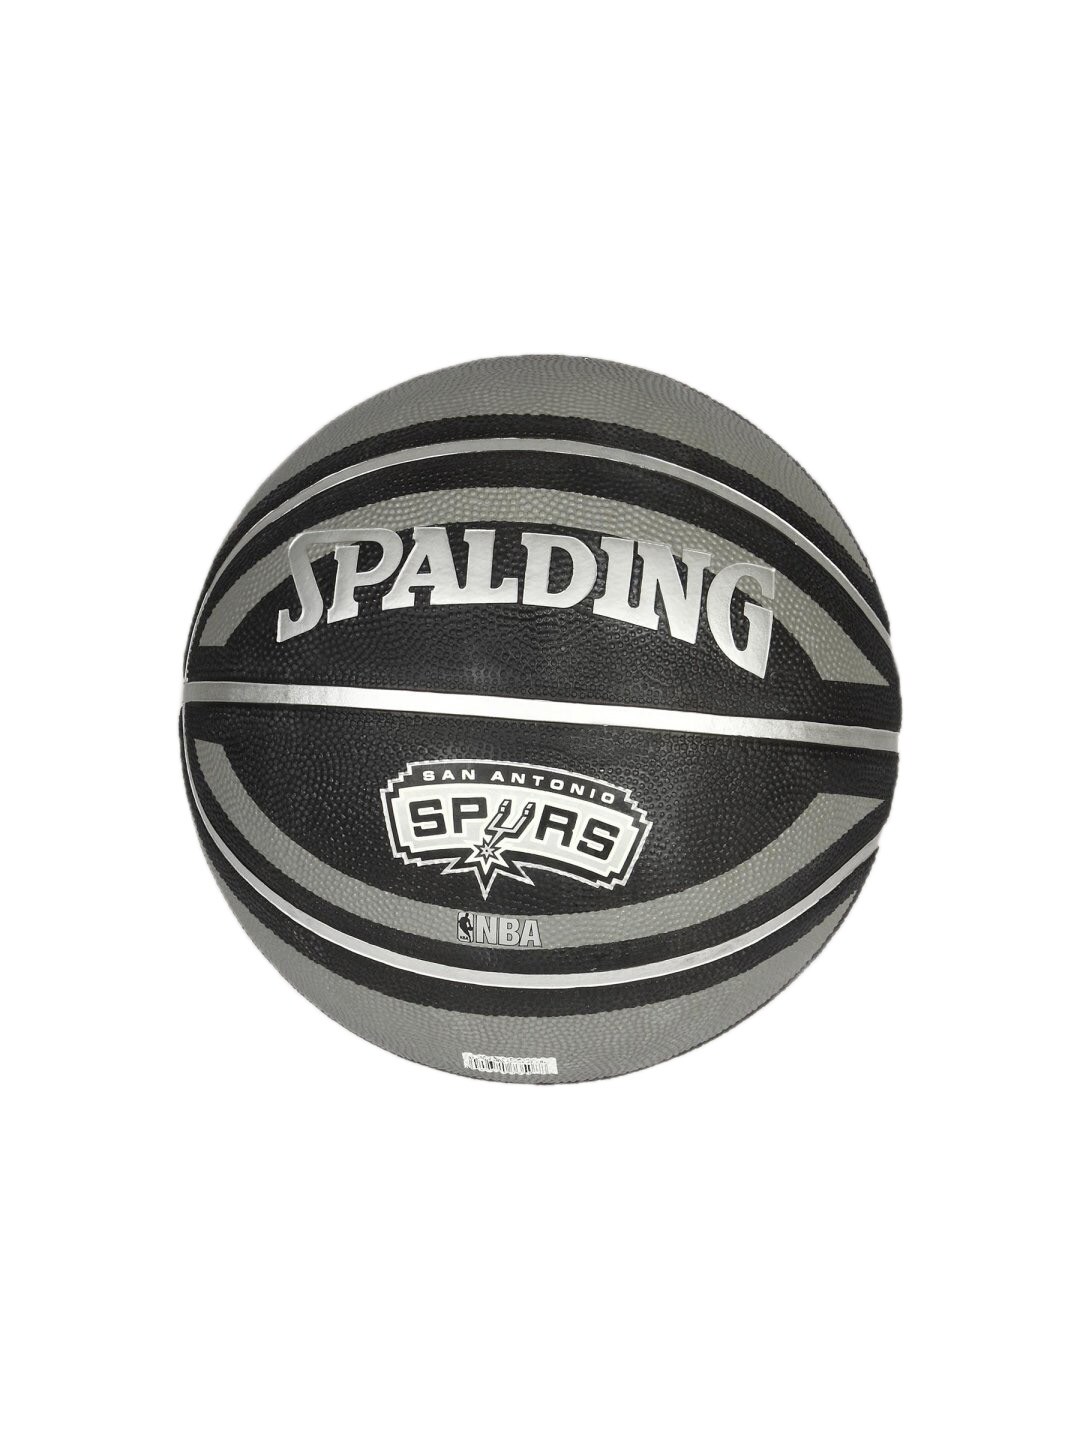 Spalding 508z Black Basketball